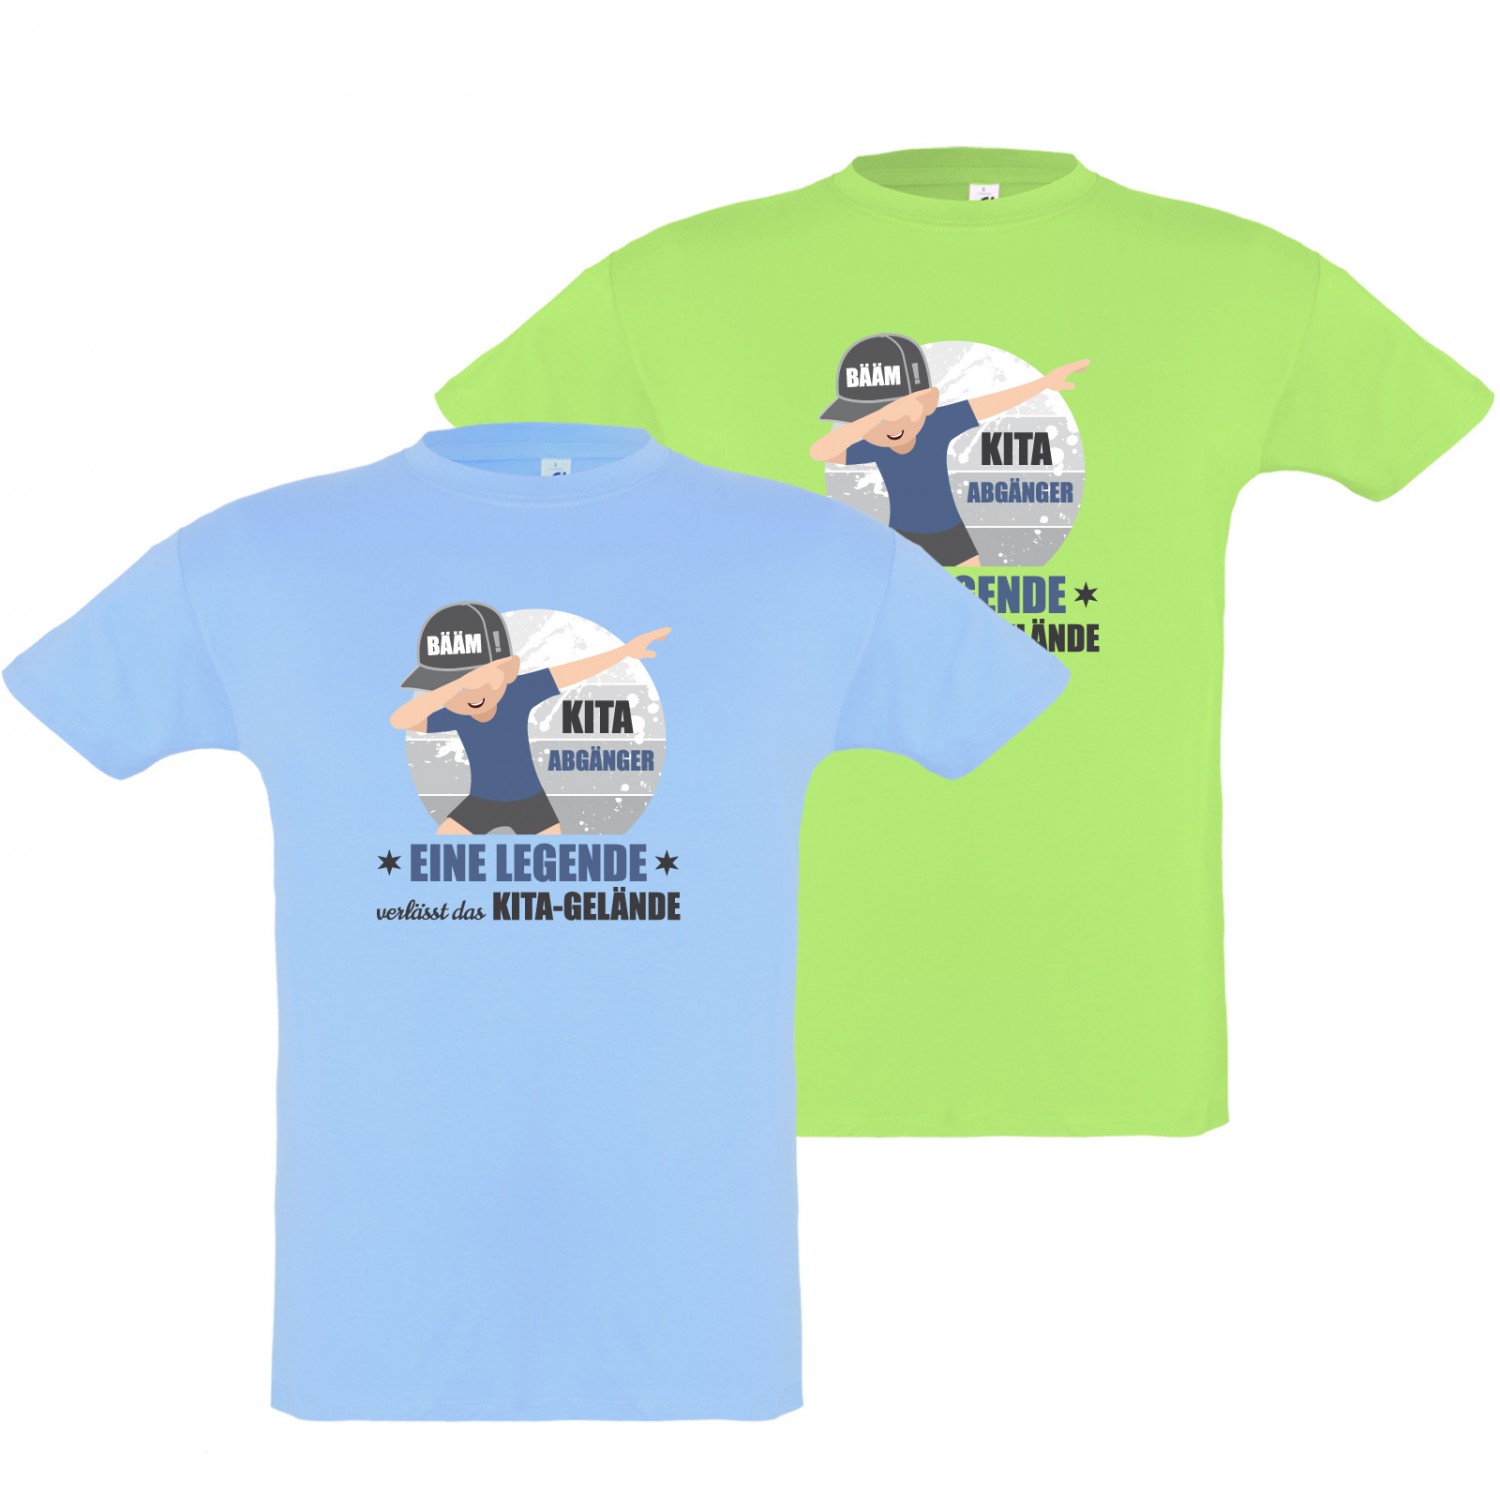 1. Foto T-Shirt Kita Jungs Abgänger Legende Shirt Kindegarten (Farbe: limette Größe: 130/140)